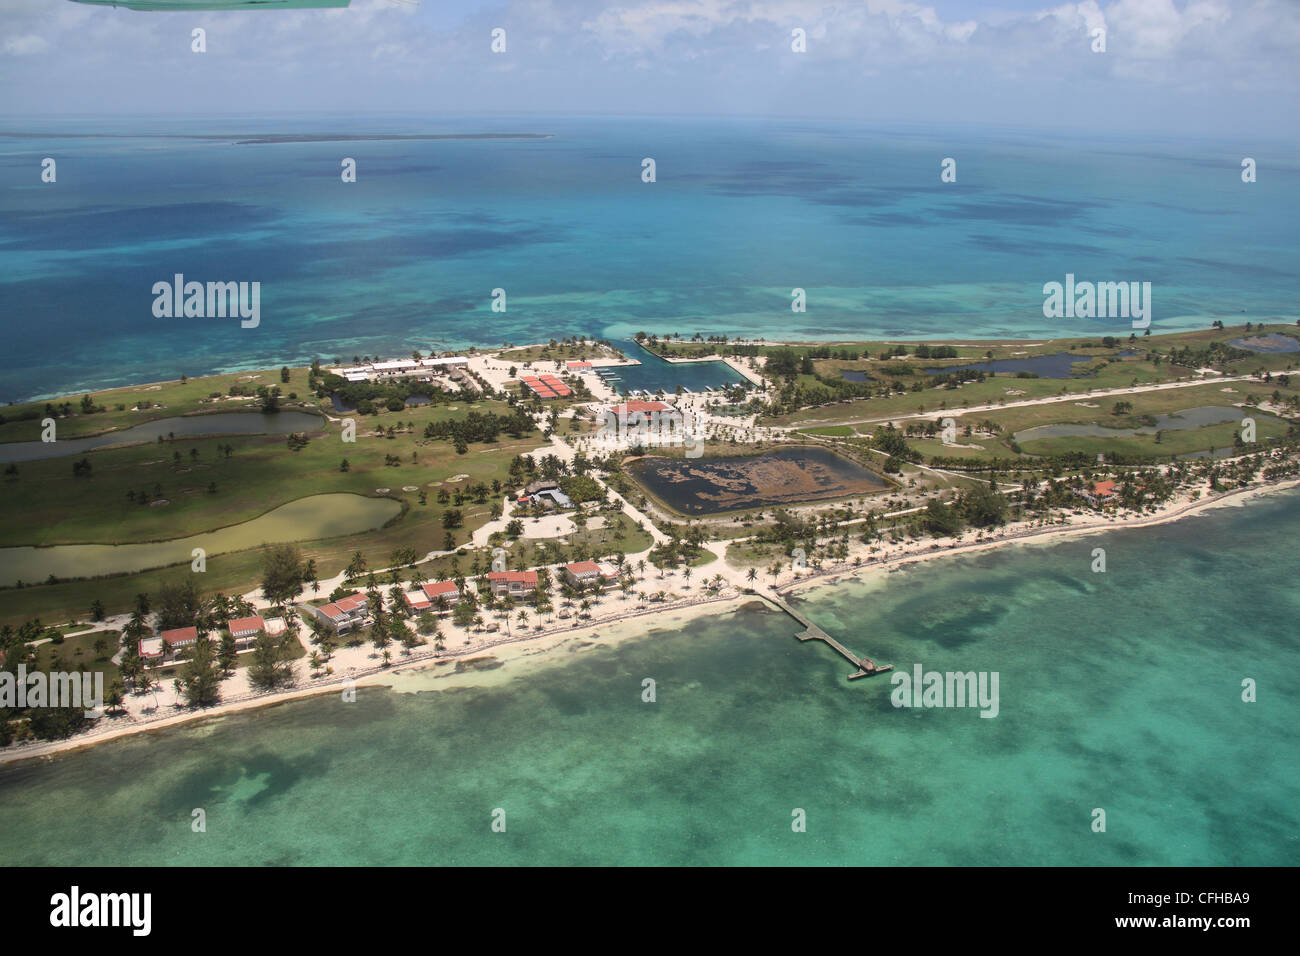 Caye Chapel Island Resort, Belize Barrier Reef, Belize, Caribbean, Central America Stock Photo